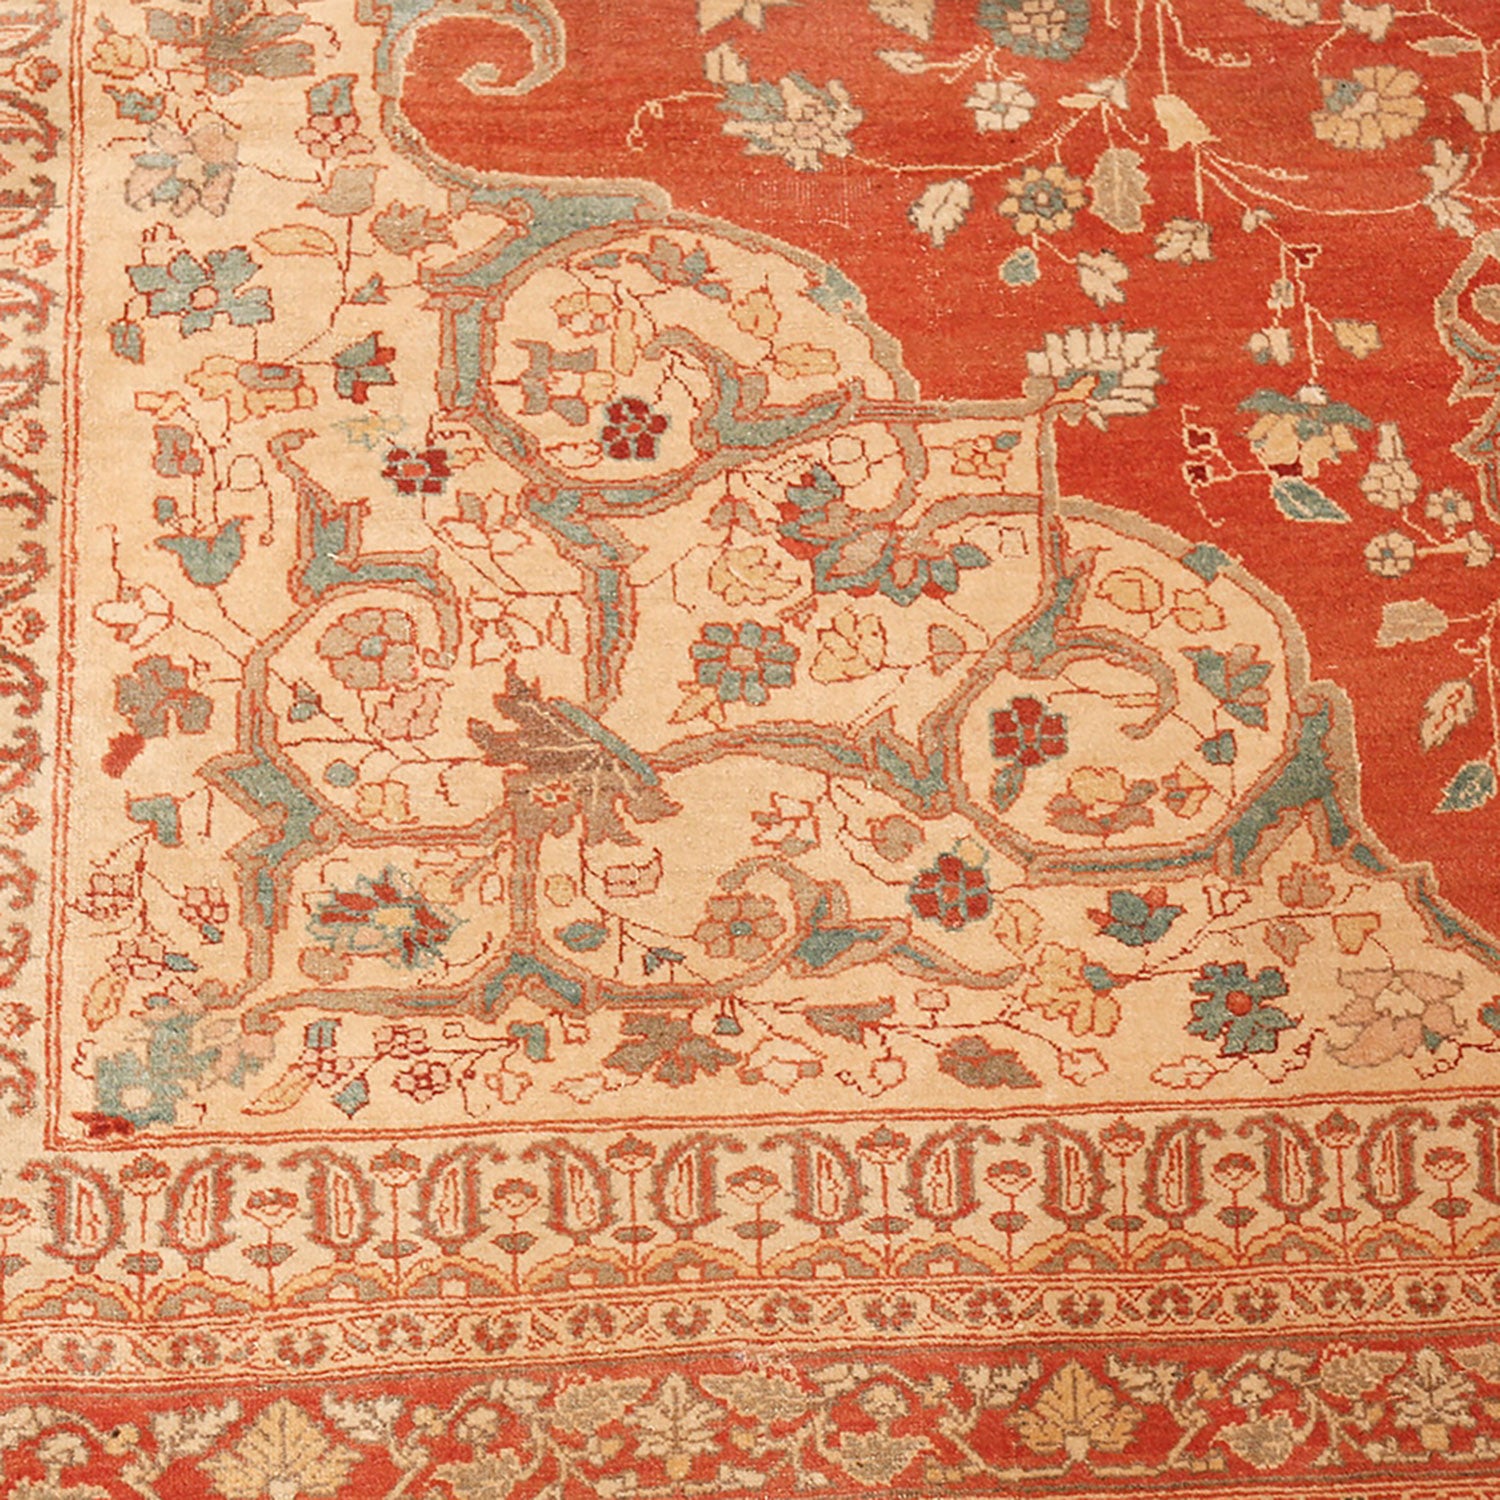 Intricately designed antique carpet showcases traditional craftsmanship and cultural symbolism.